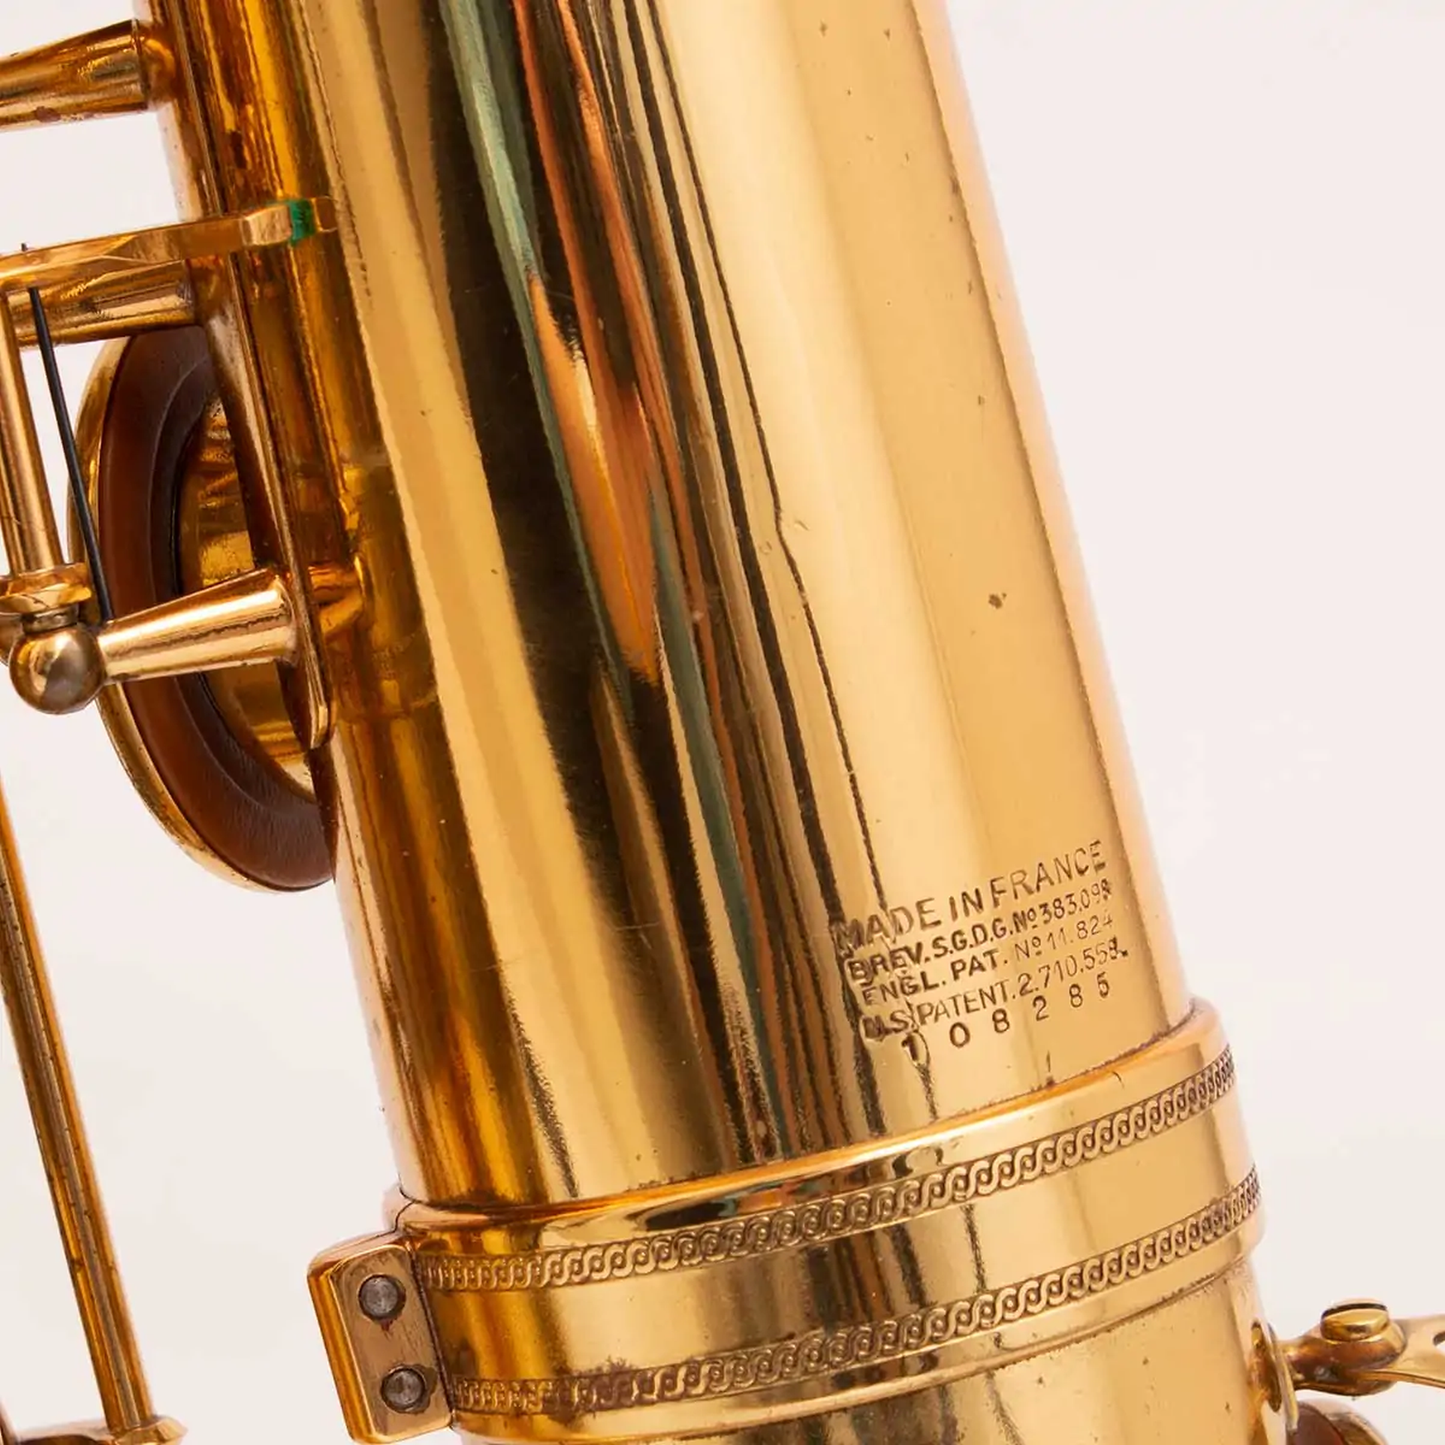 Mark VI baritone saxophone